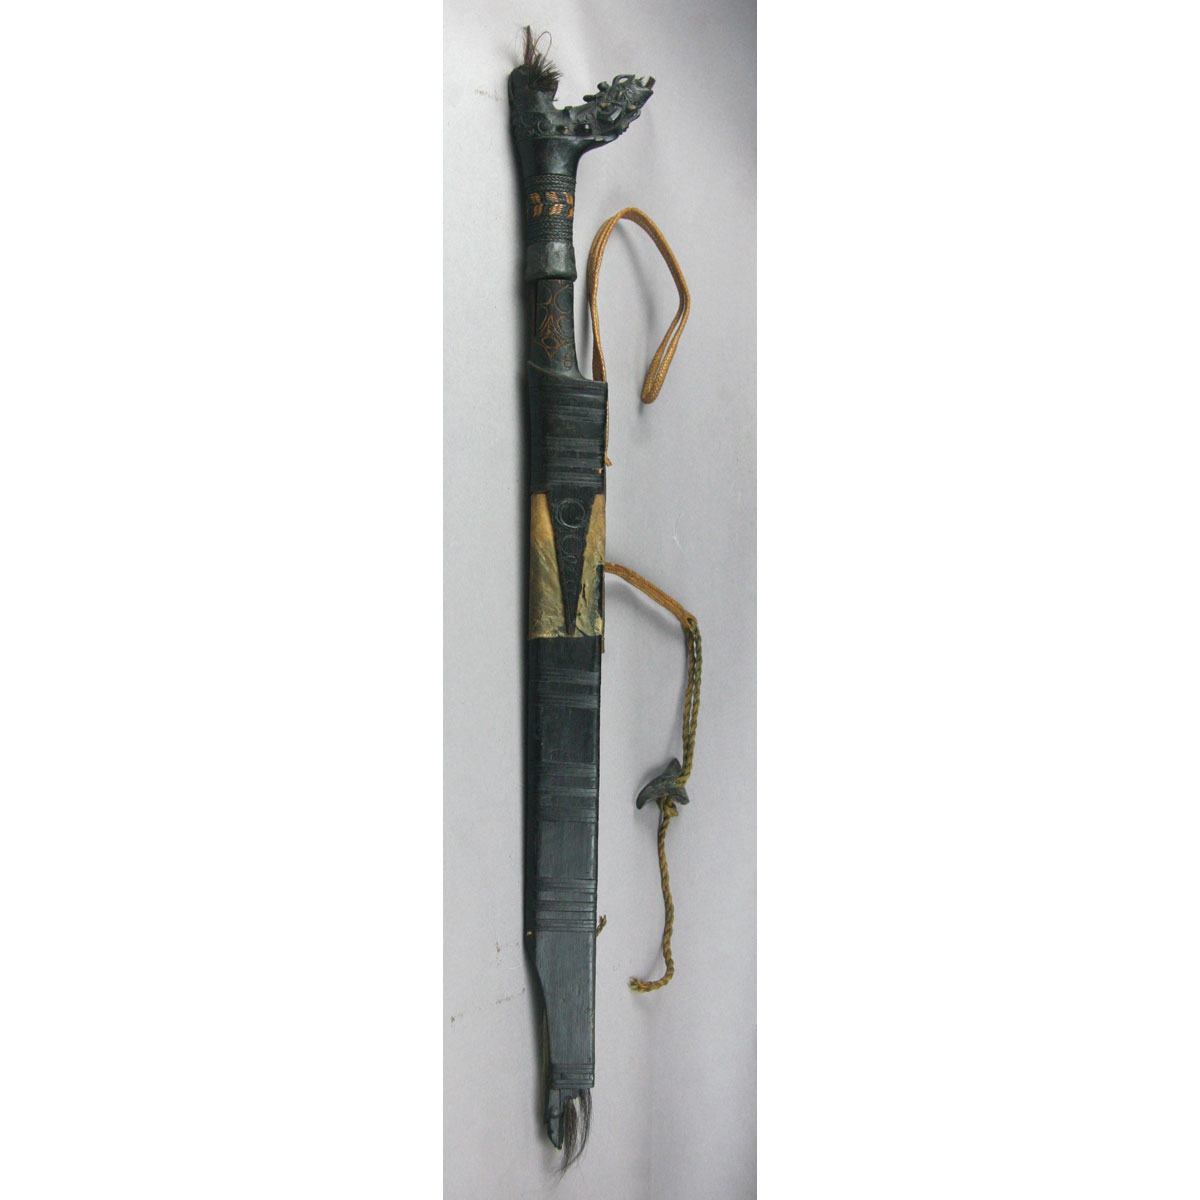 Tribal Art : A Dayak Mandau sword